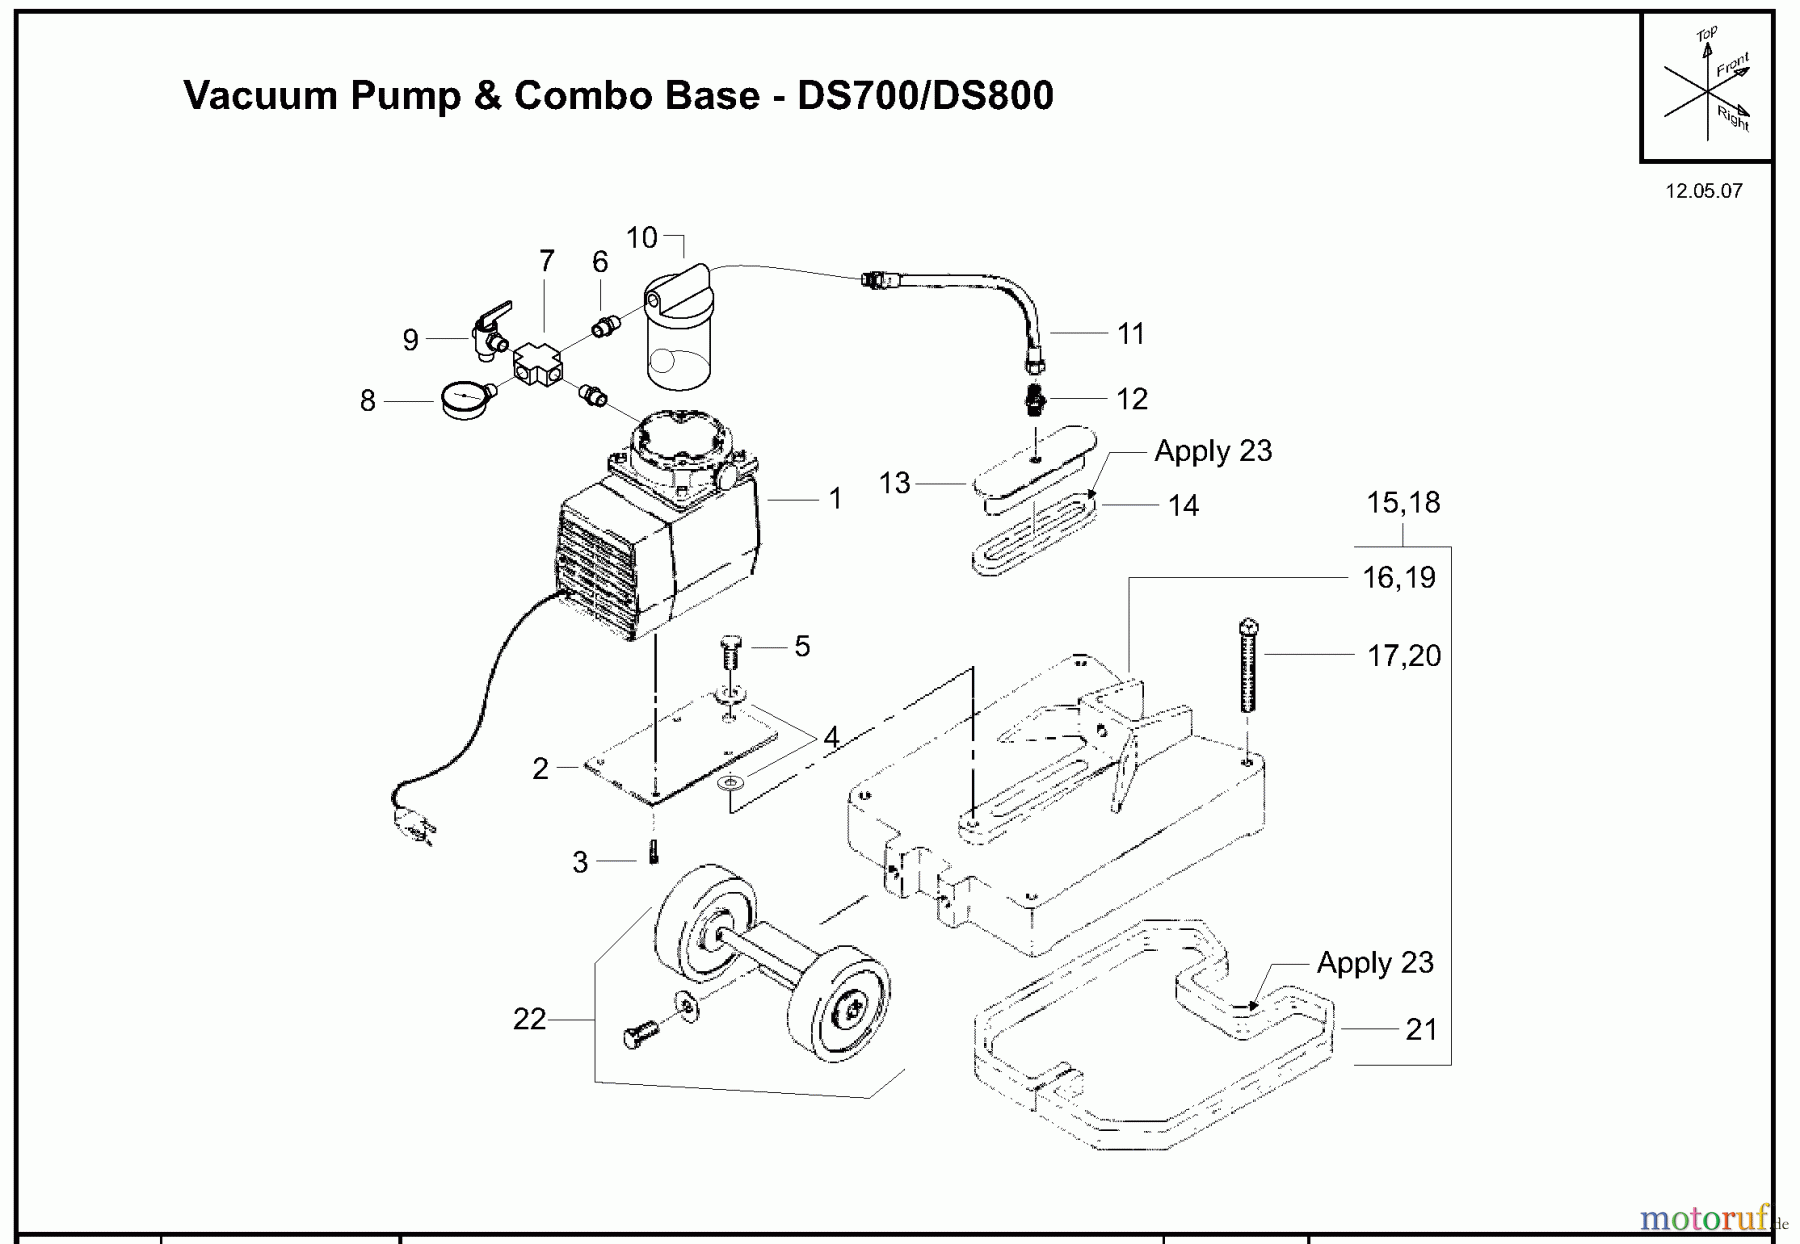  Husqvarna Zubehör DS800 (504625401) - Husqvarna Drill Stand (2007-12 & After) Vacuum Pump & Combo Base